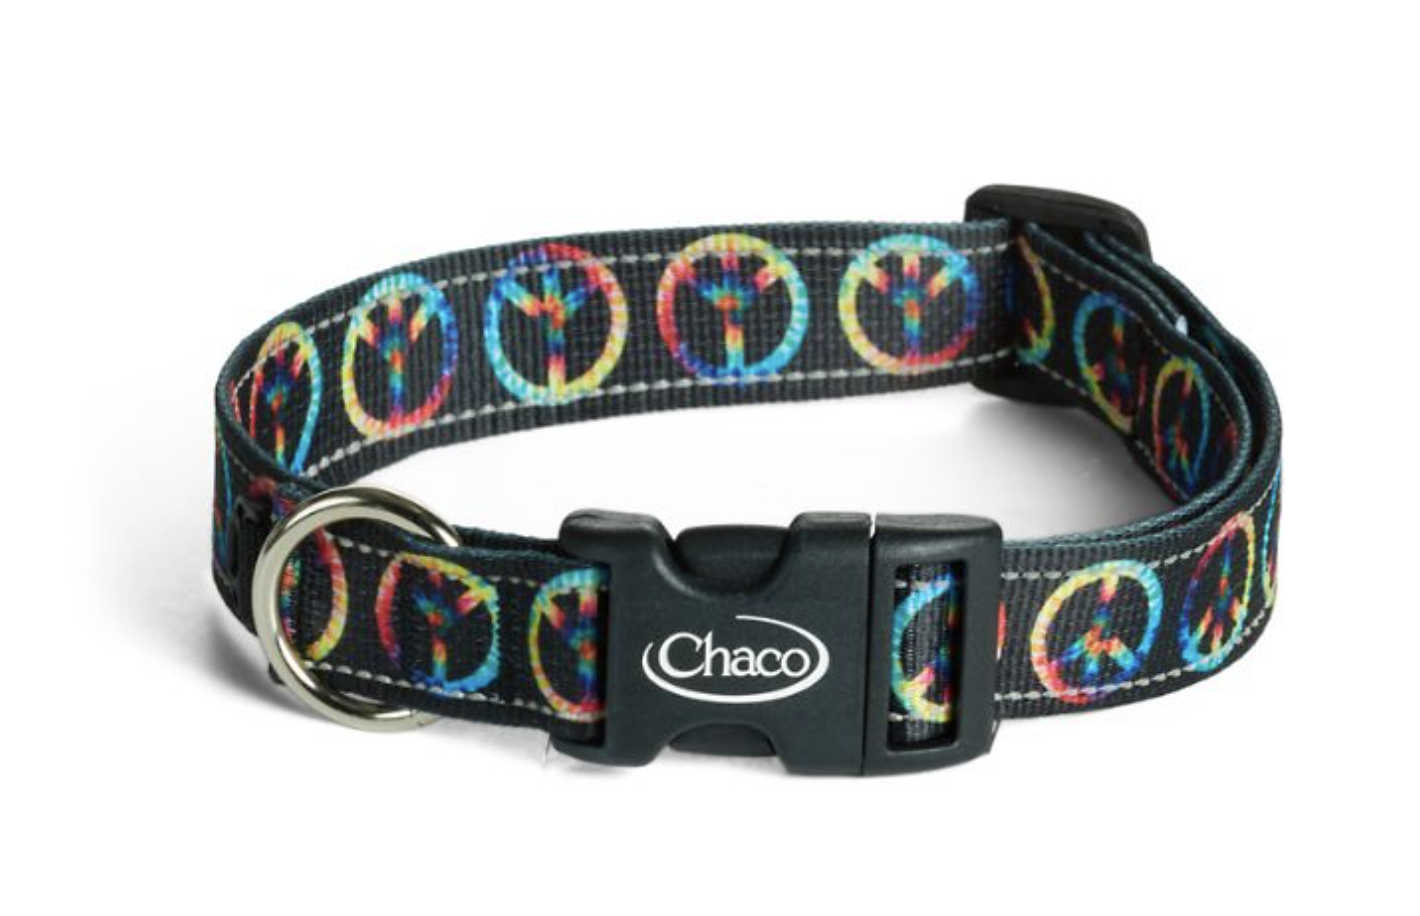 Chaco Dog Collars